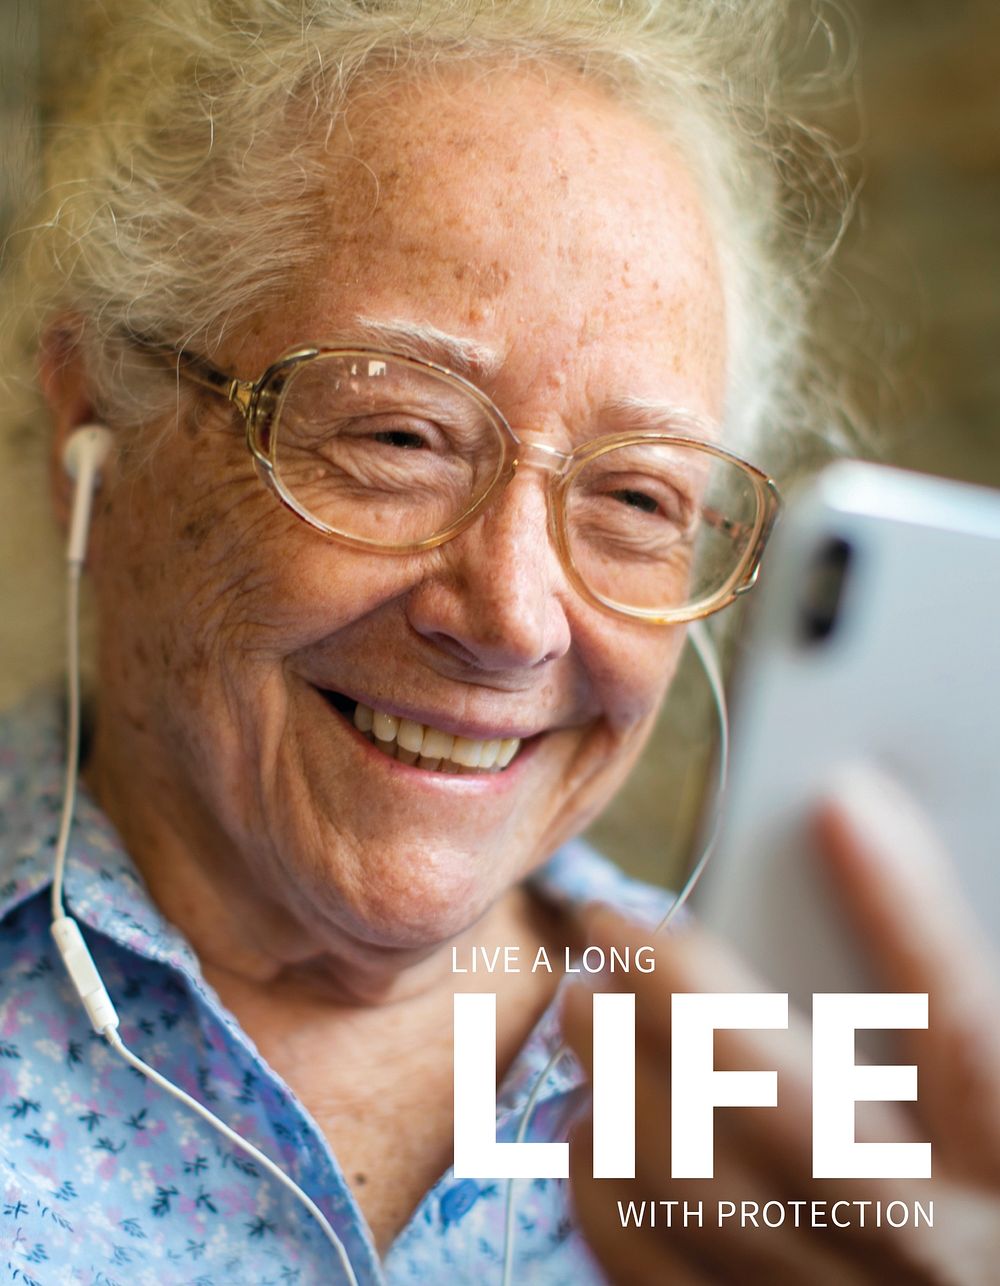 Long life insurance template psd for elderlies ad poster